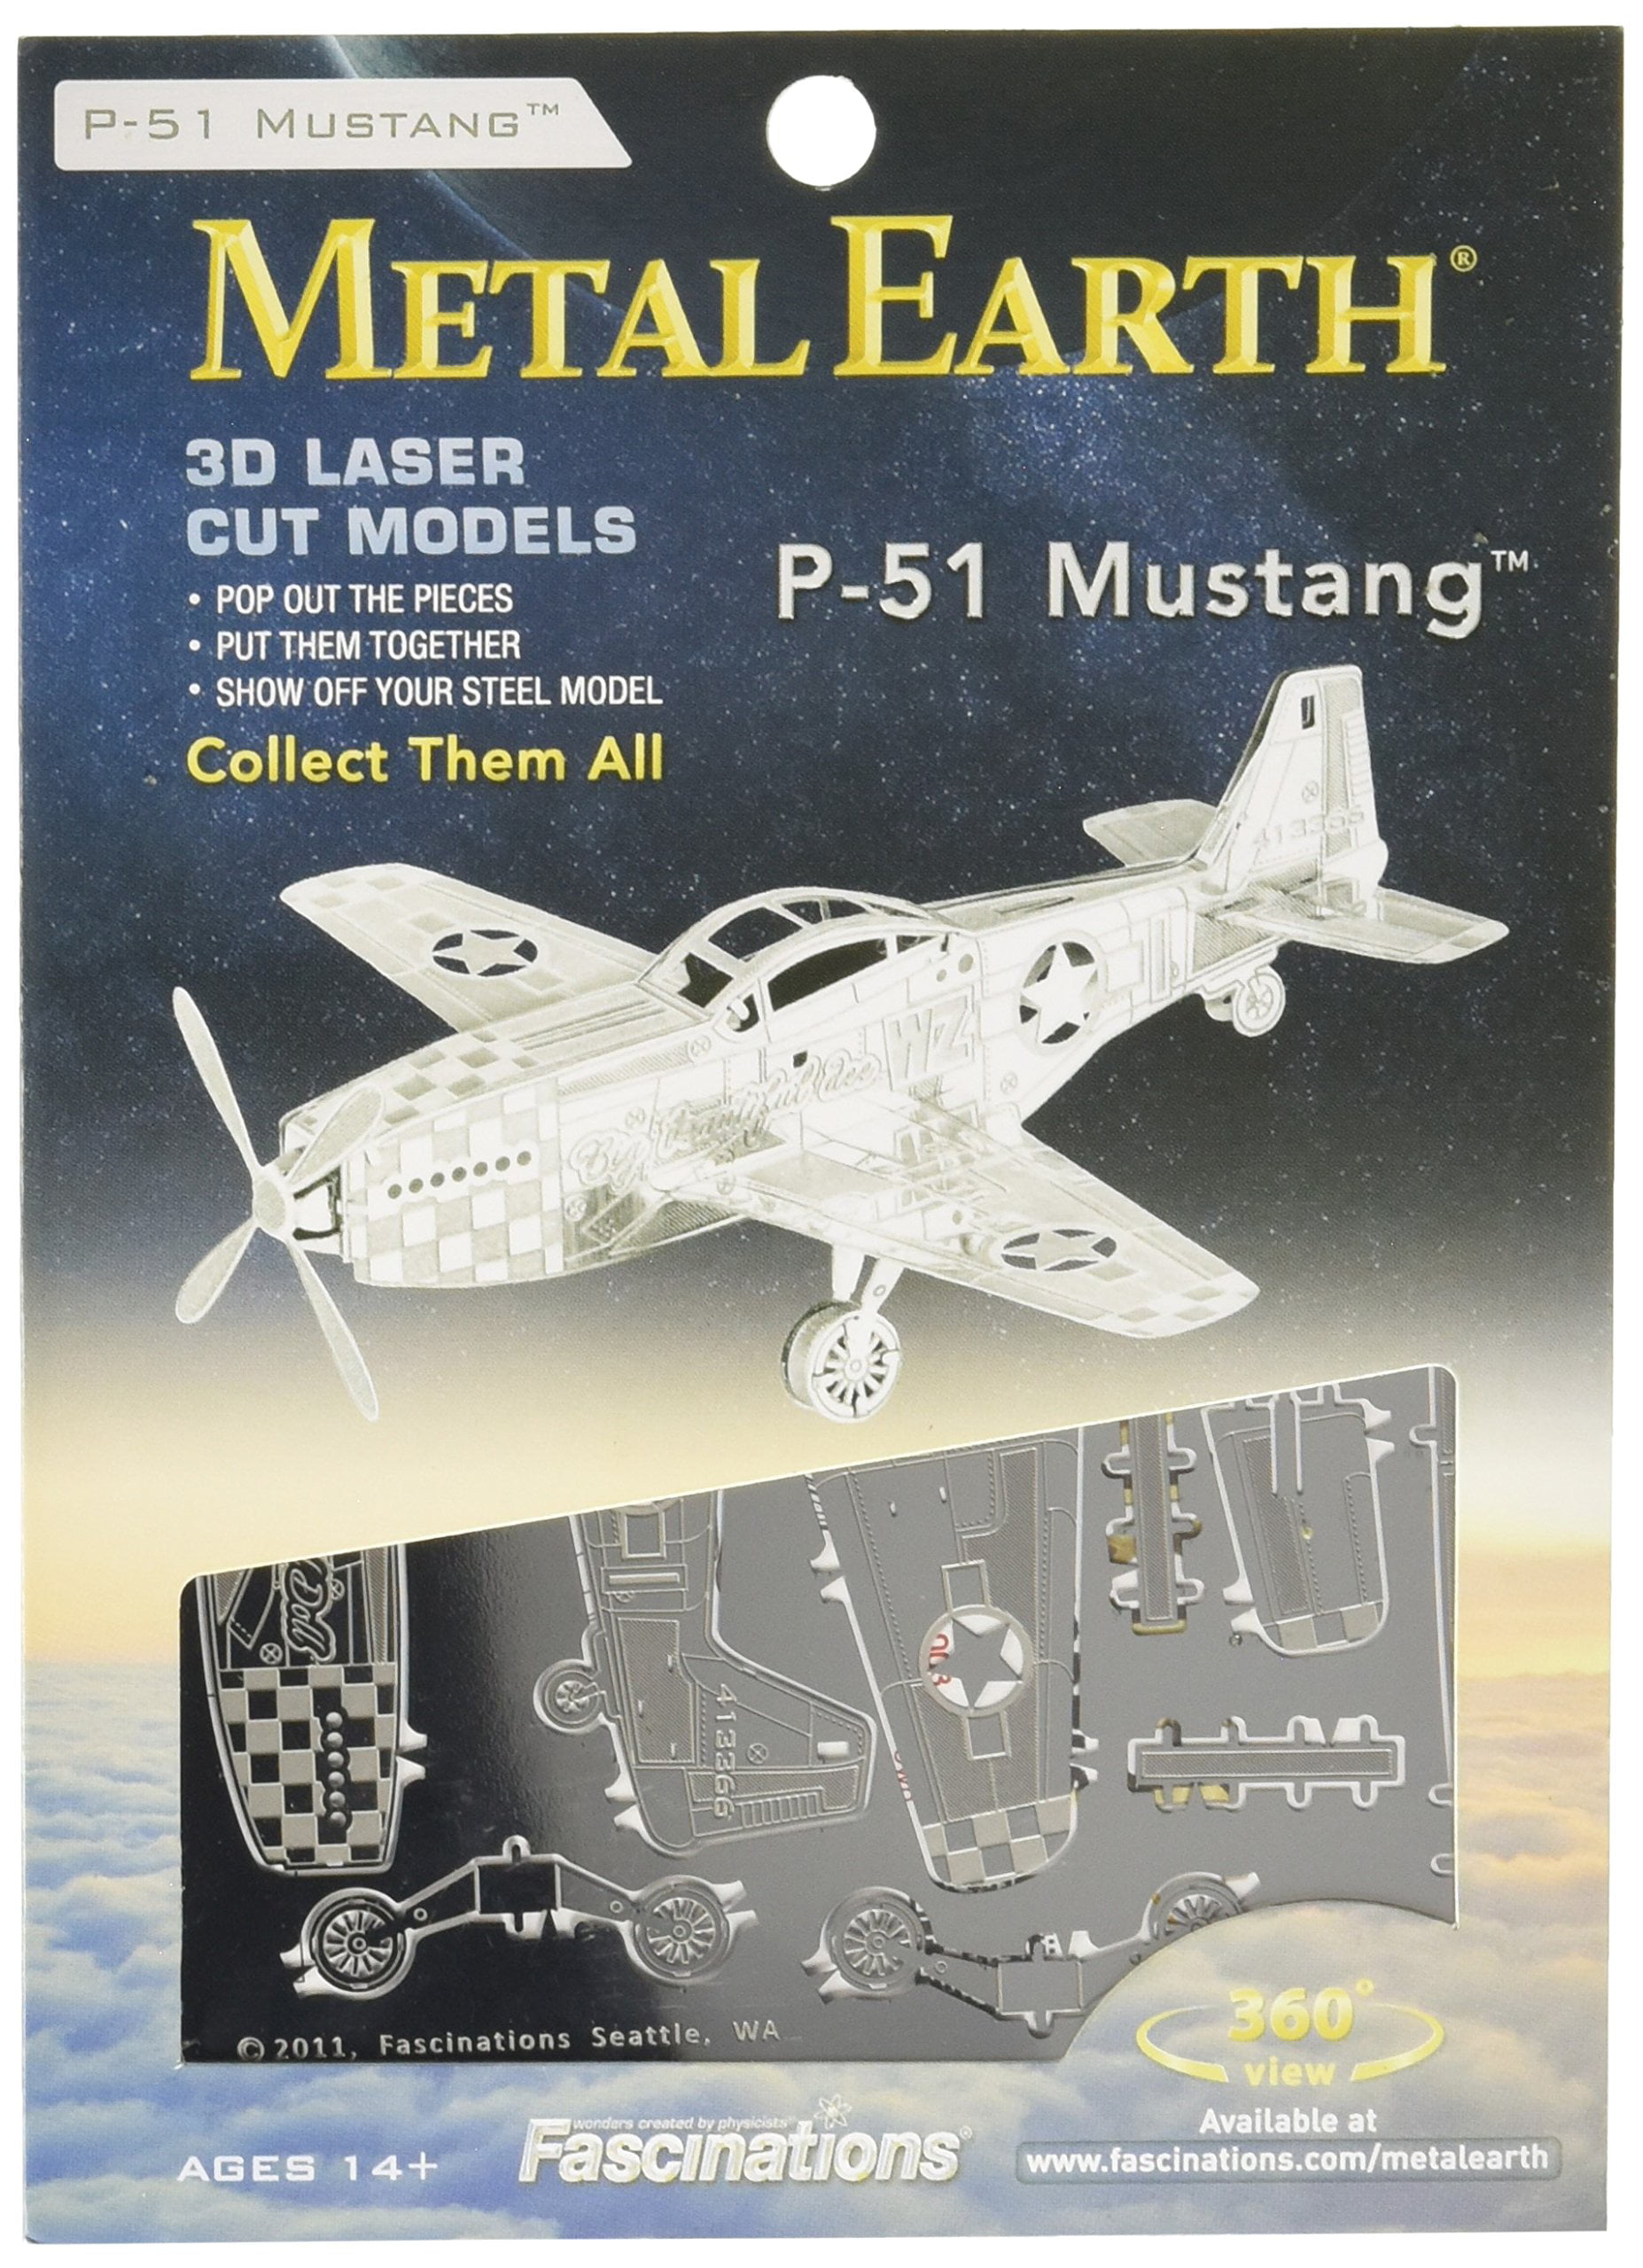 Metal Earth Fascinations original Aviation Metal Puzzle laser cut models 